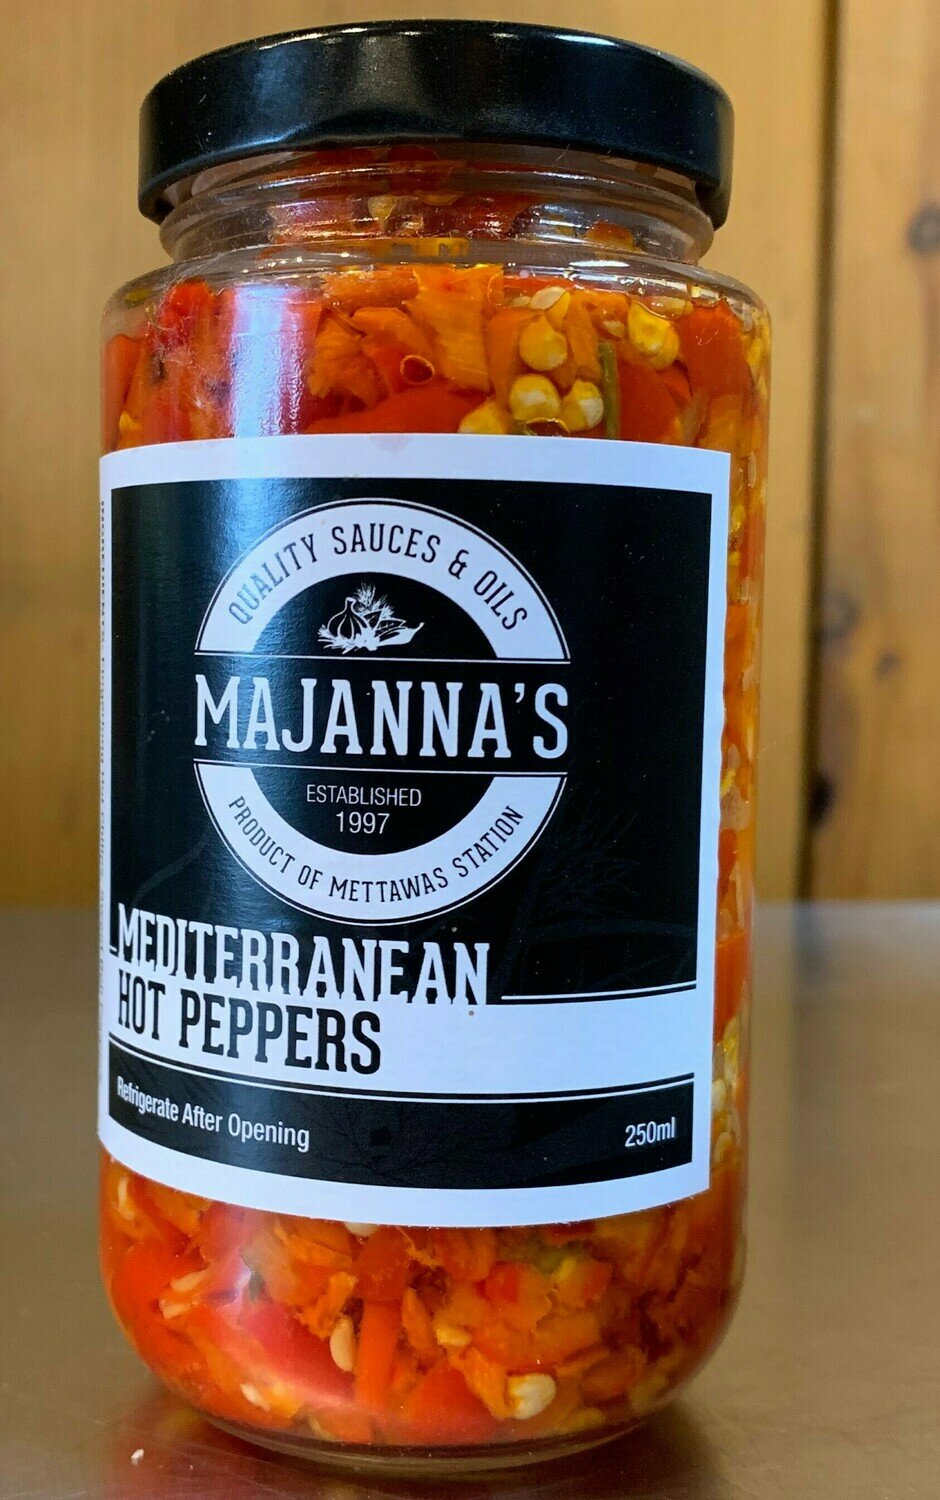 Majanna's - Mediterranean Hot Peppers